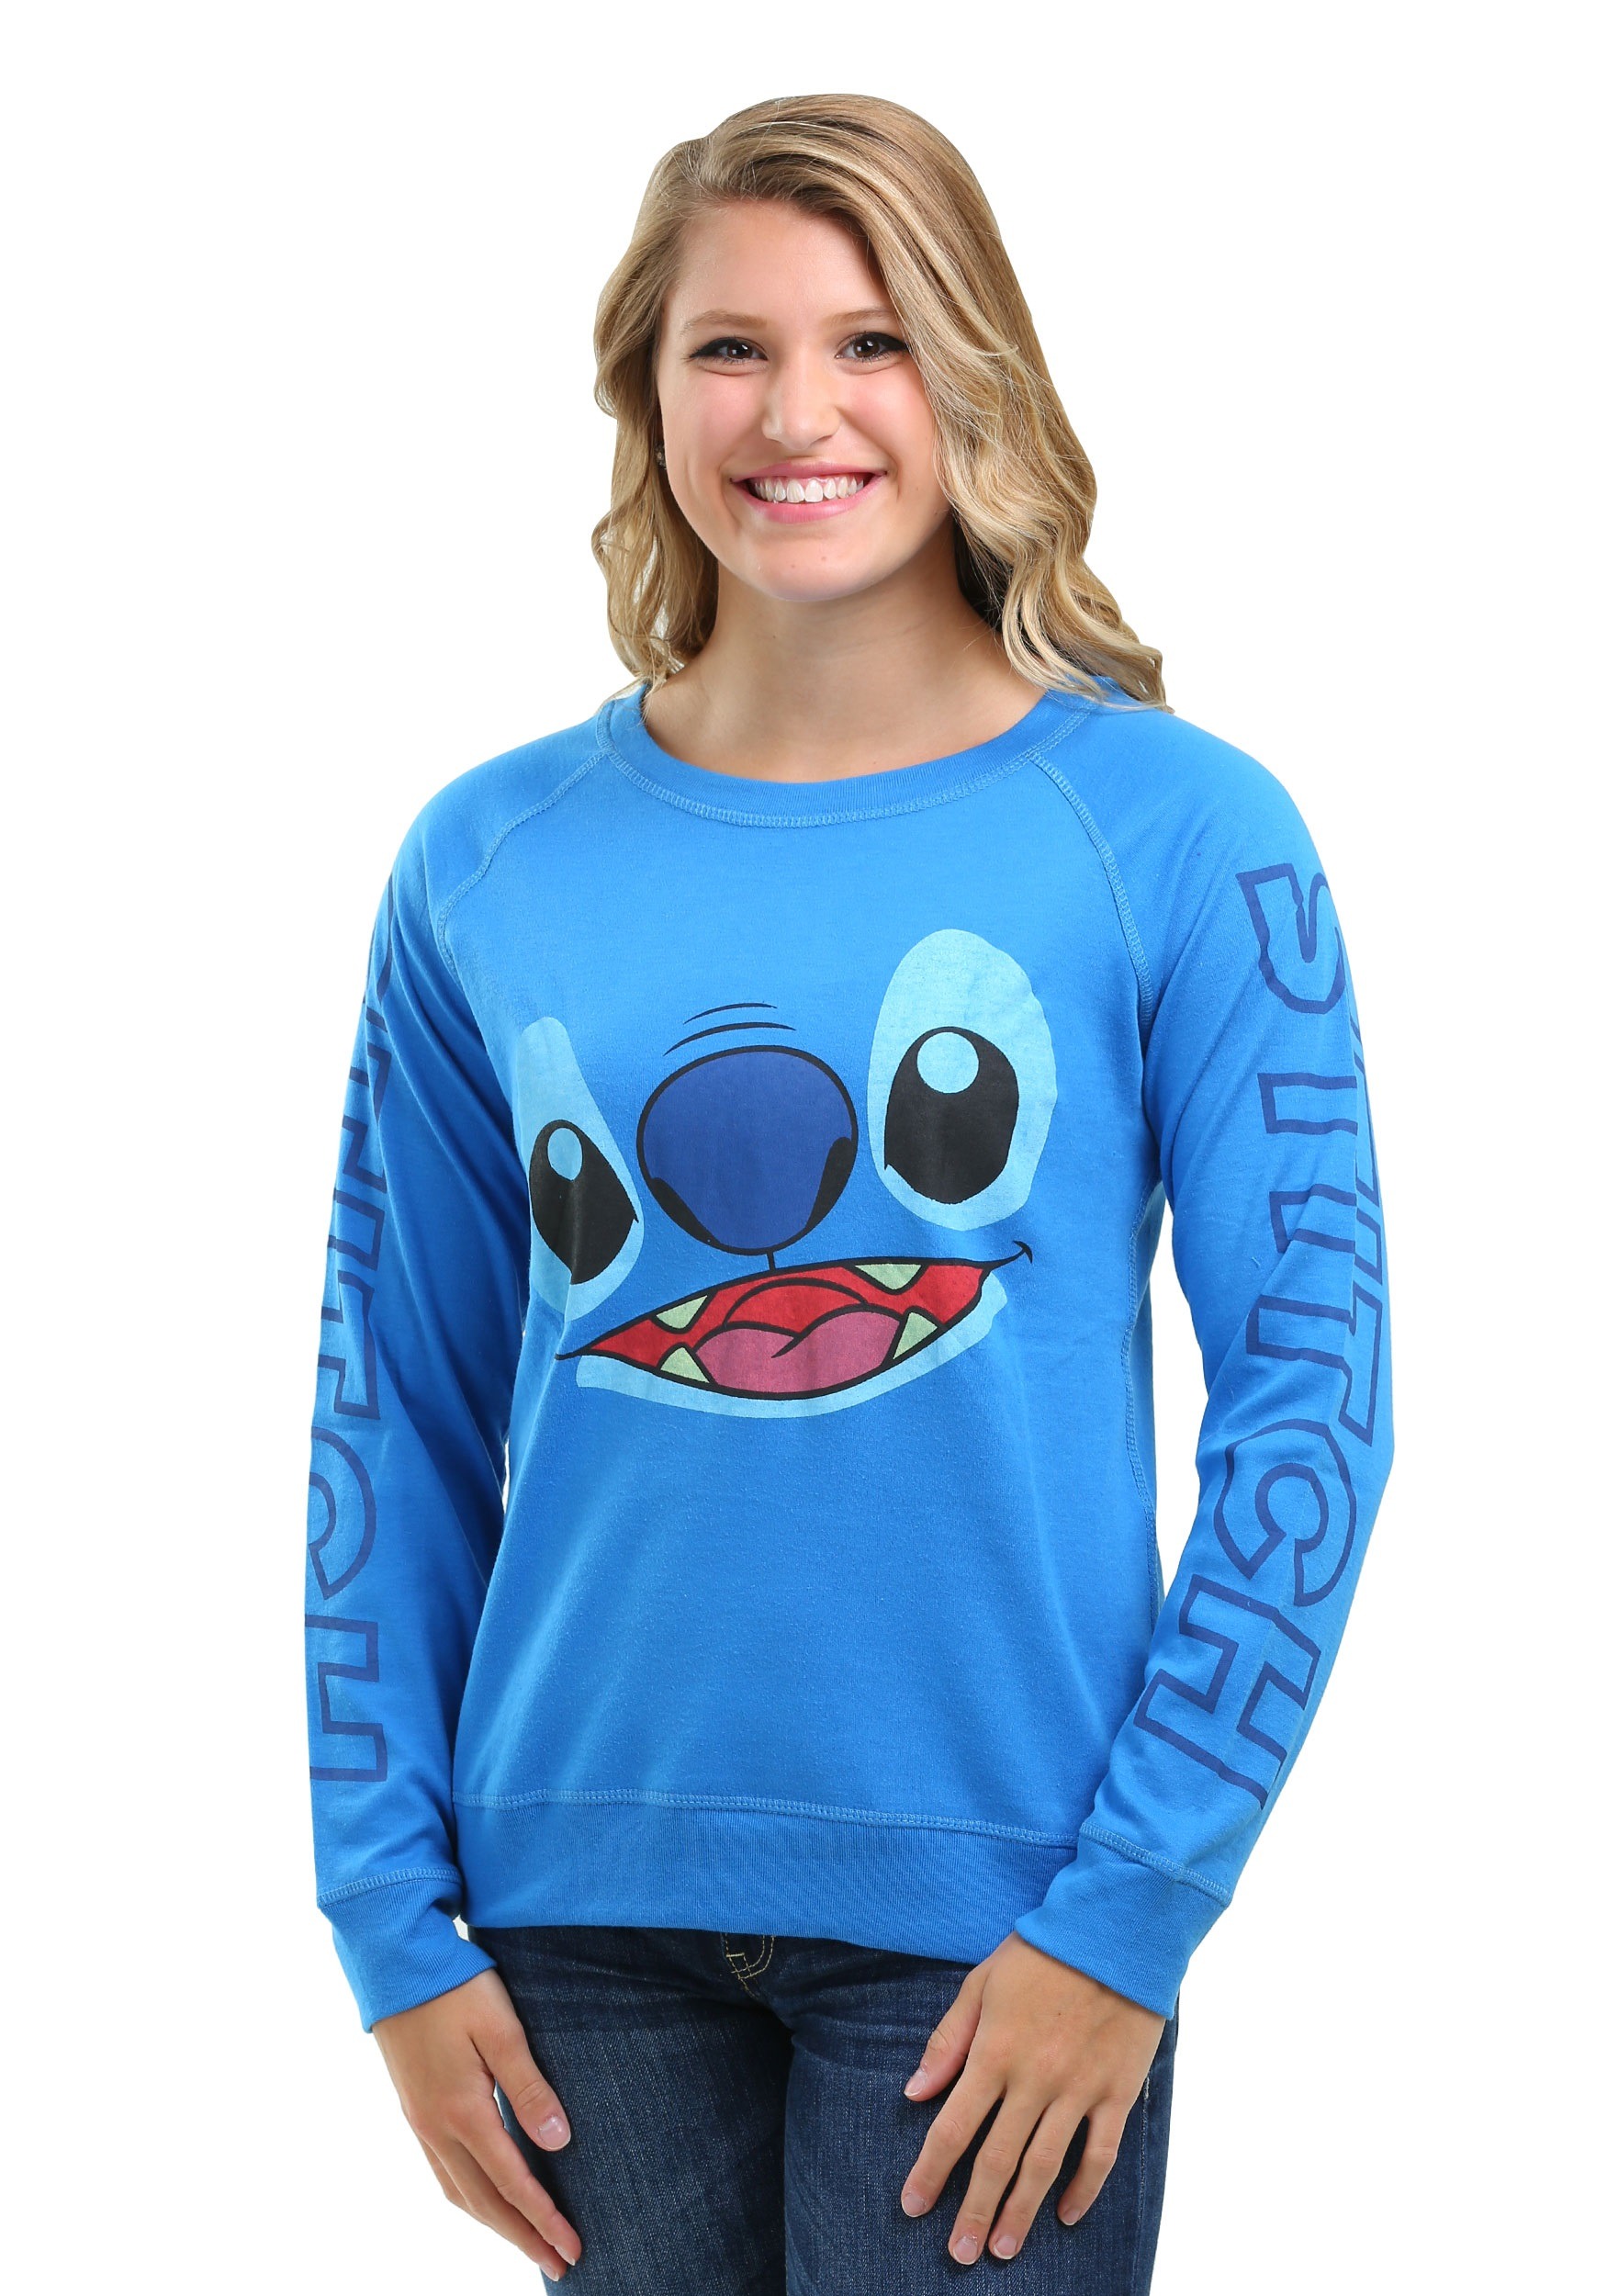 Stitch Big Face Sleeve Print Crew Sweatshirt for Juniors